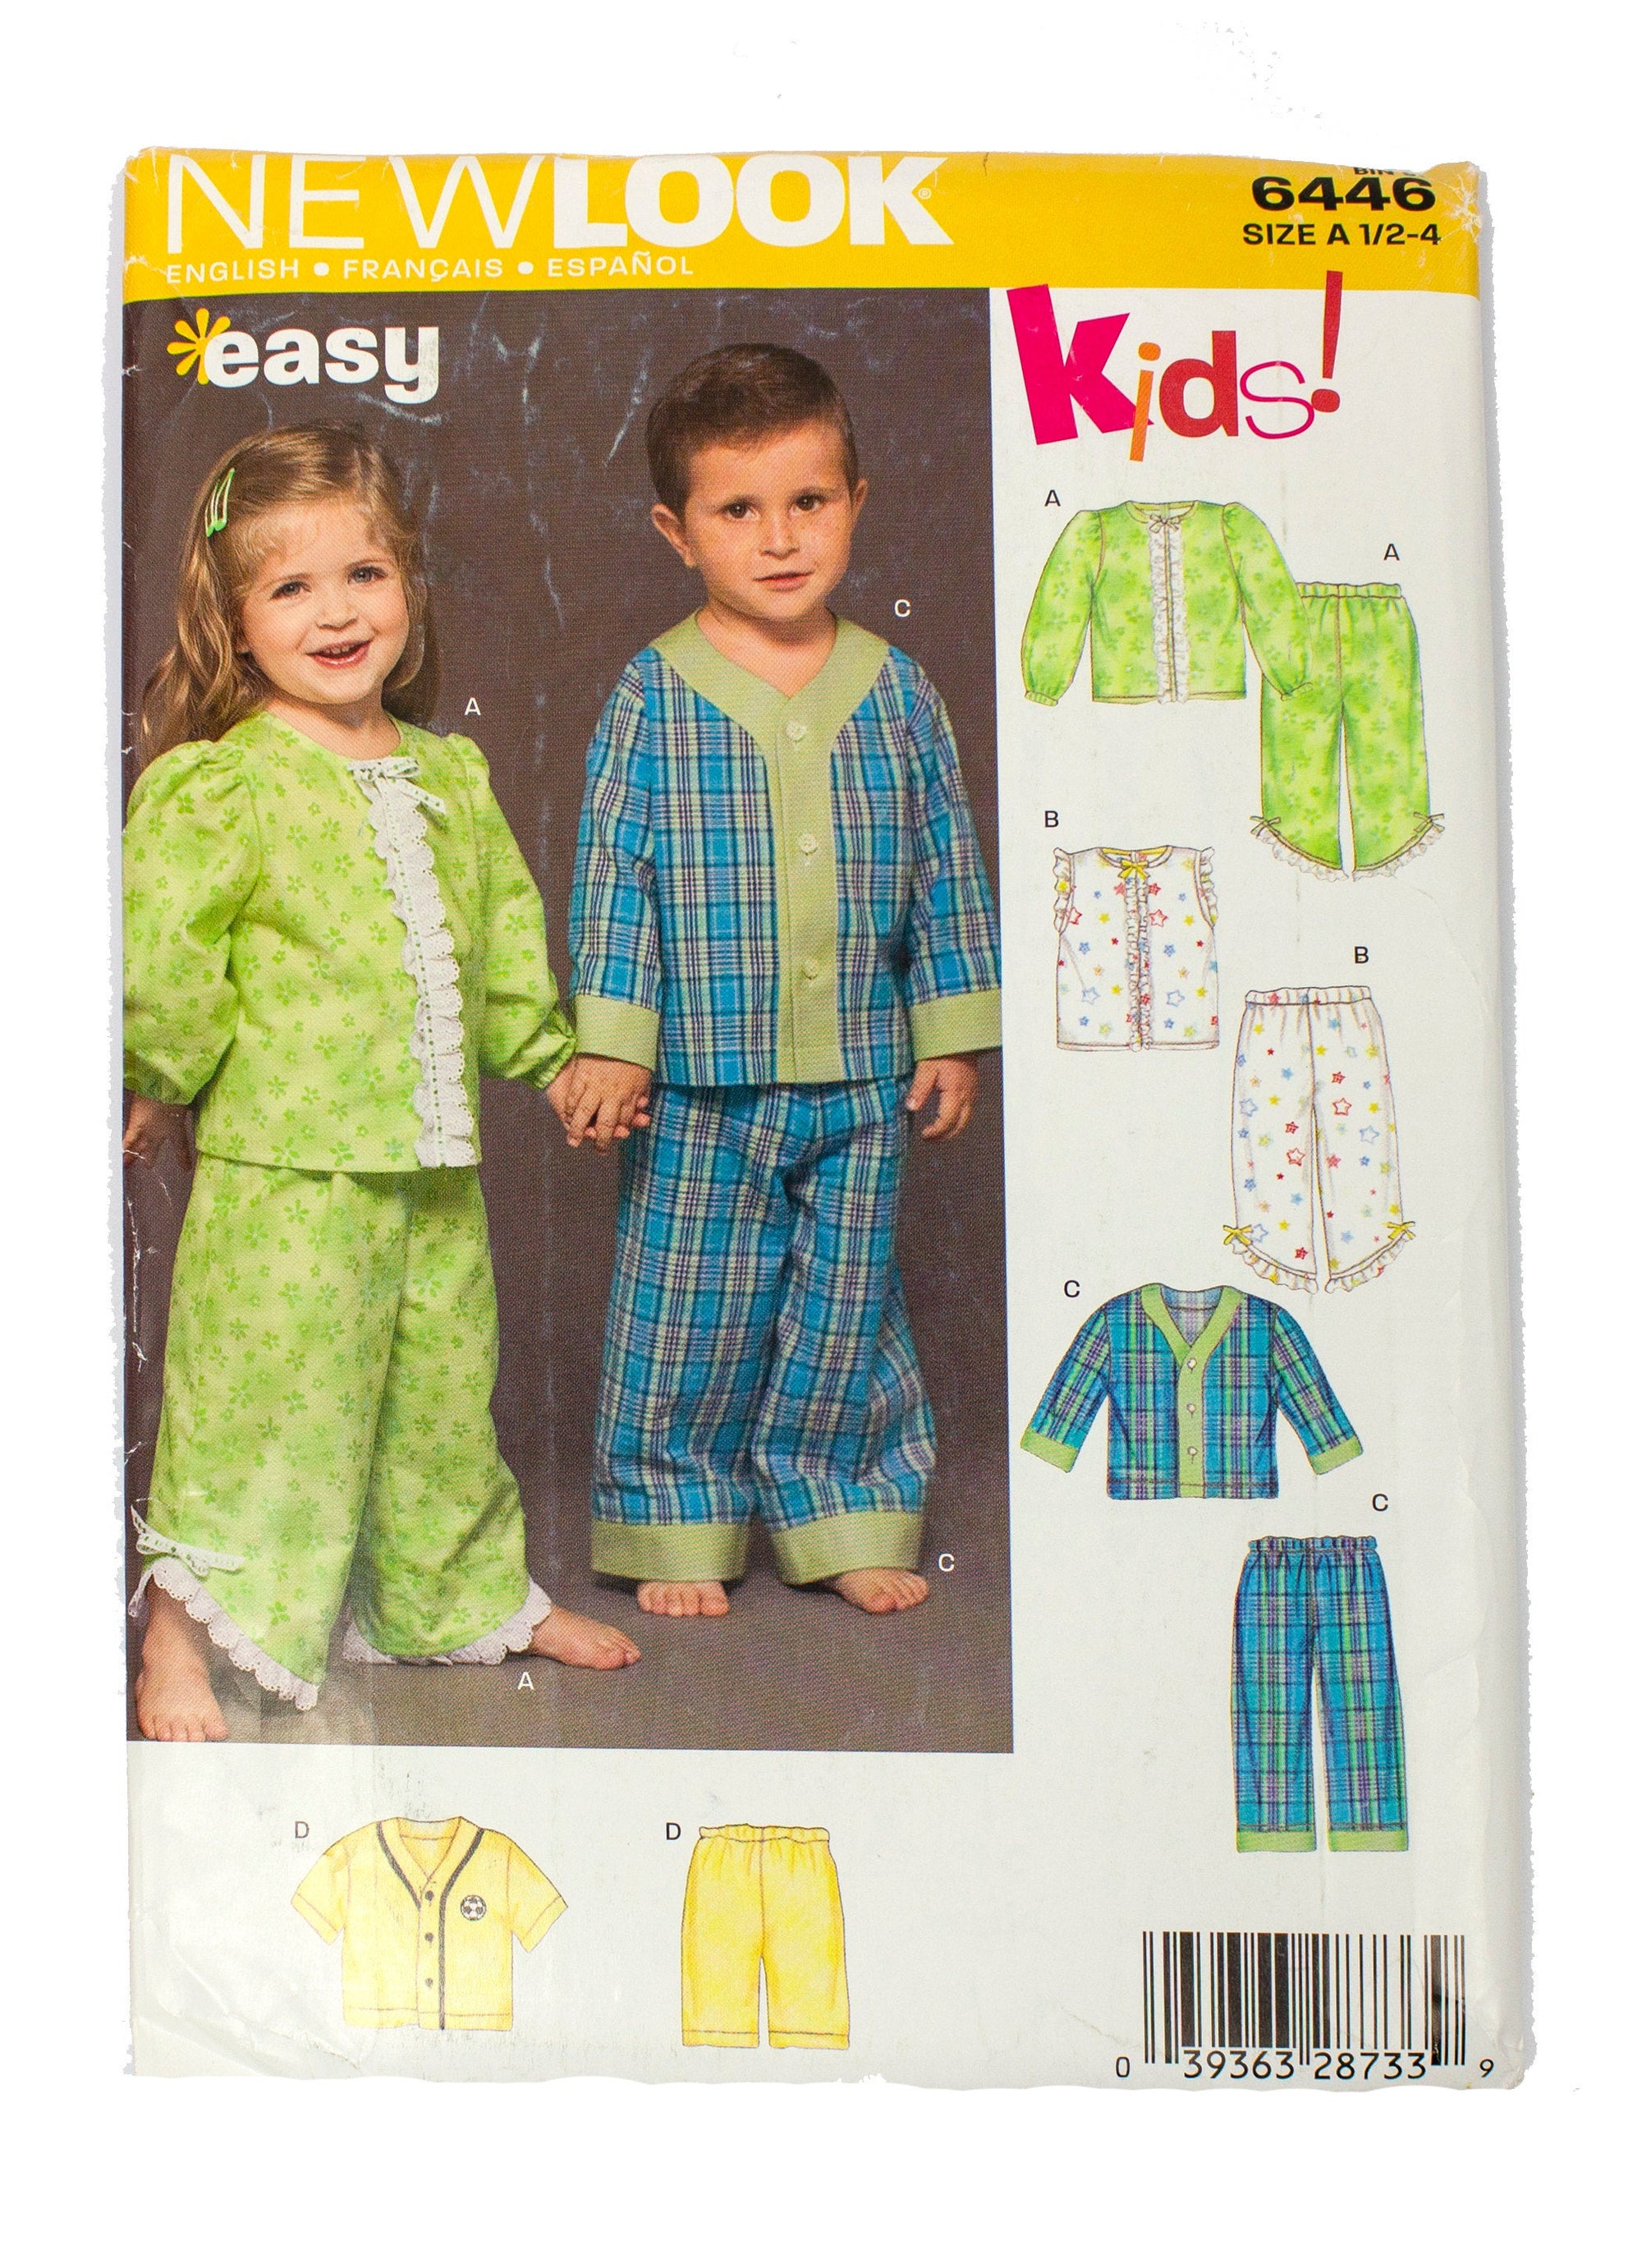 New Look 6446 Toddlers Pajamas Set Uncut - Sizes 1/2 - 4